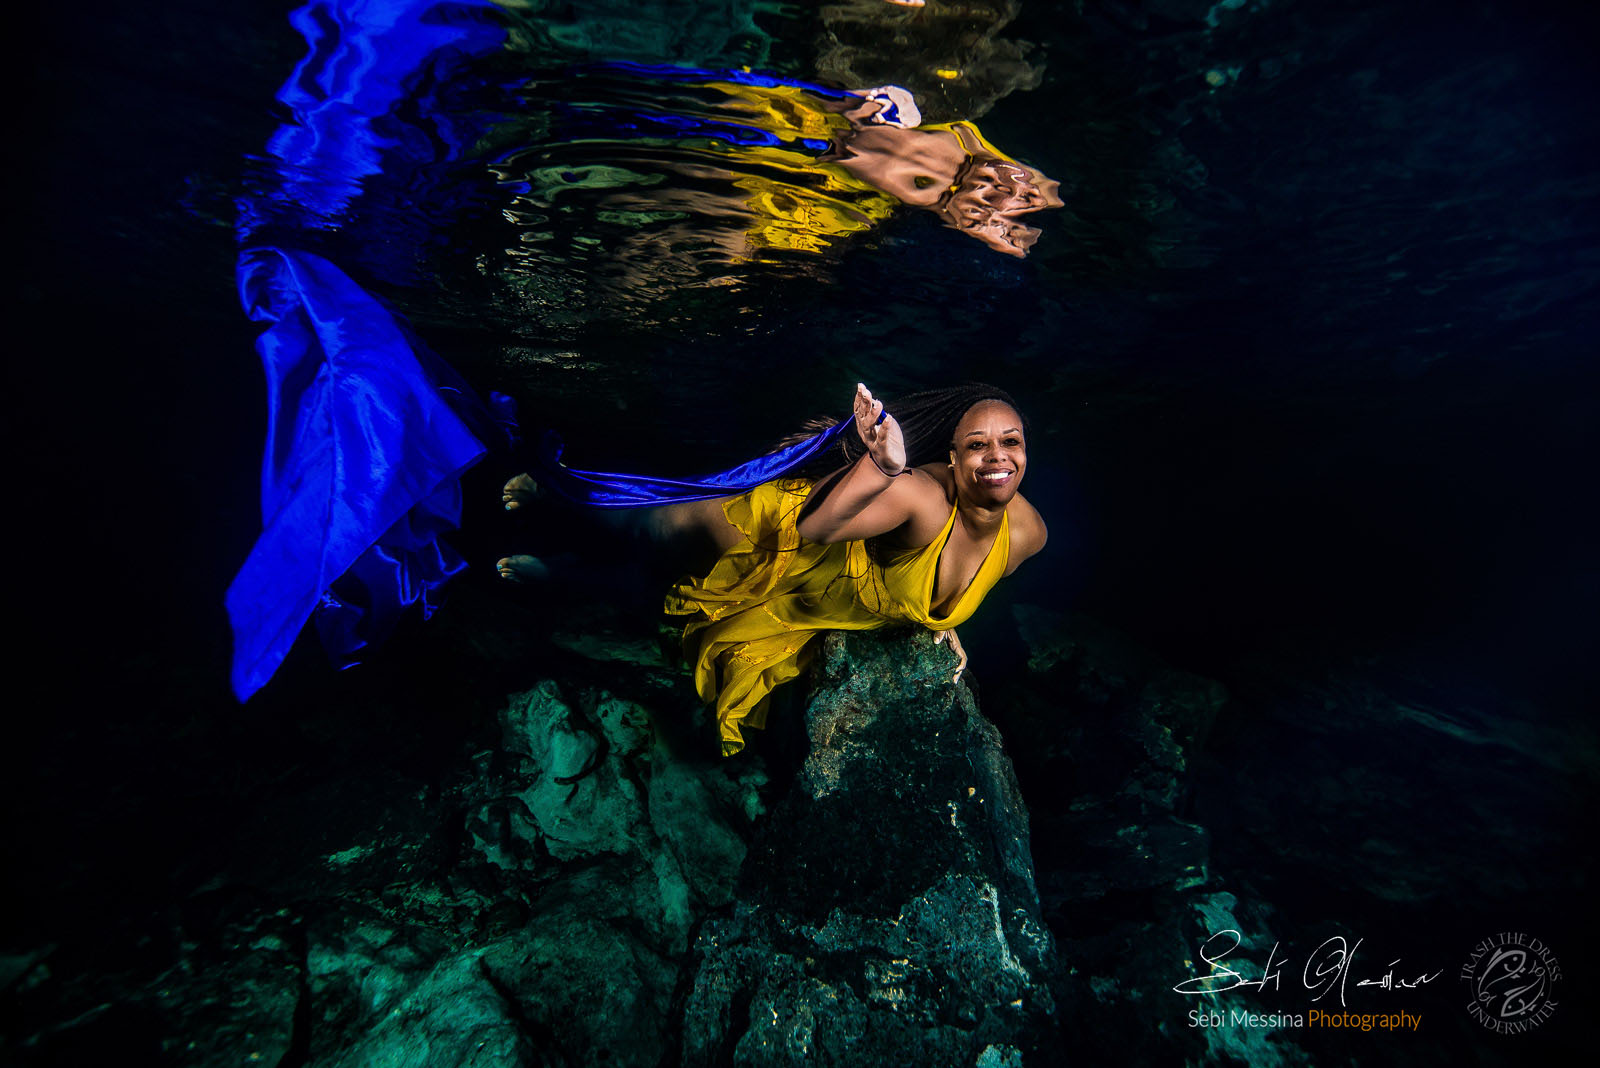 Underwater Modelling in a cenote near Tulum - Sebi Messina Photography